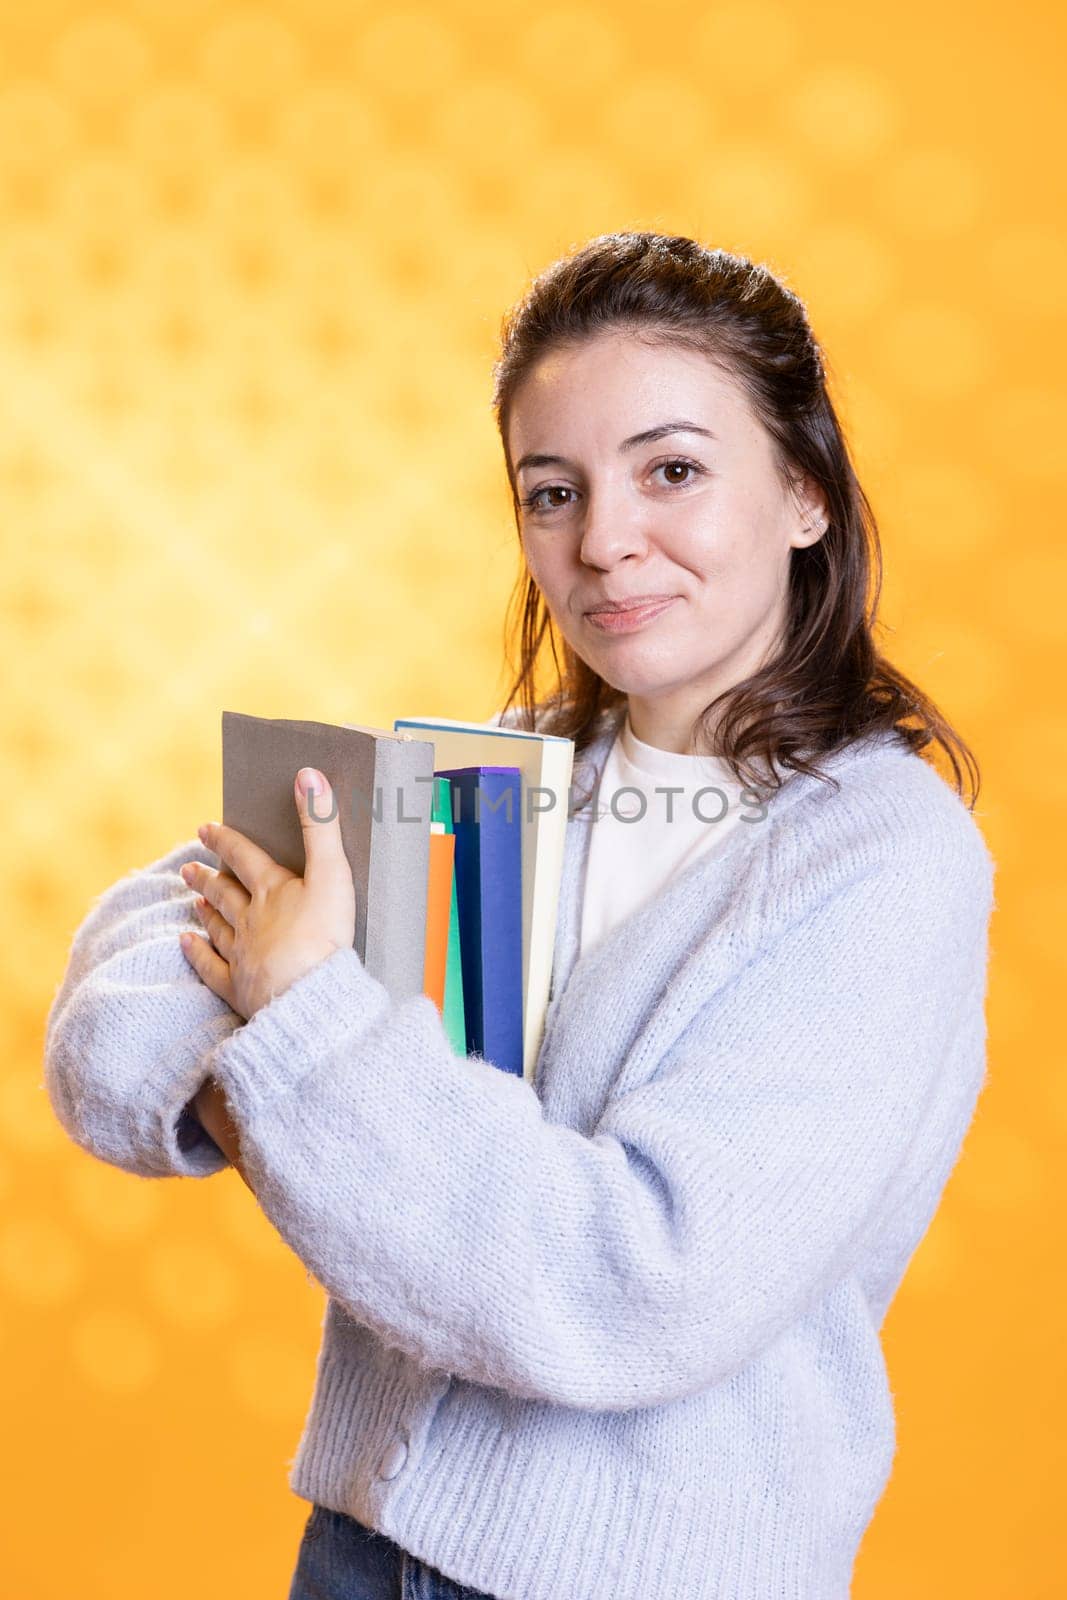 Jolly person holding pile of books, preparing for university assessment by DCStudio